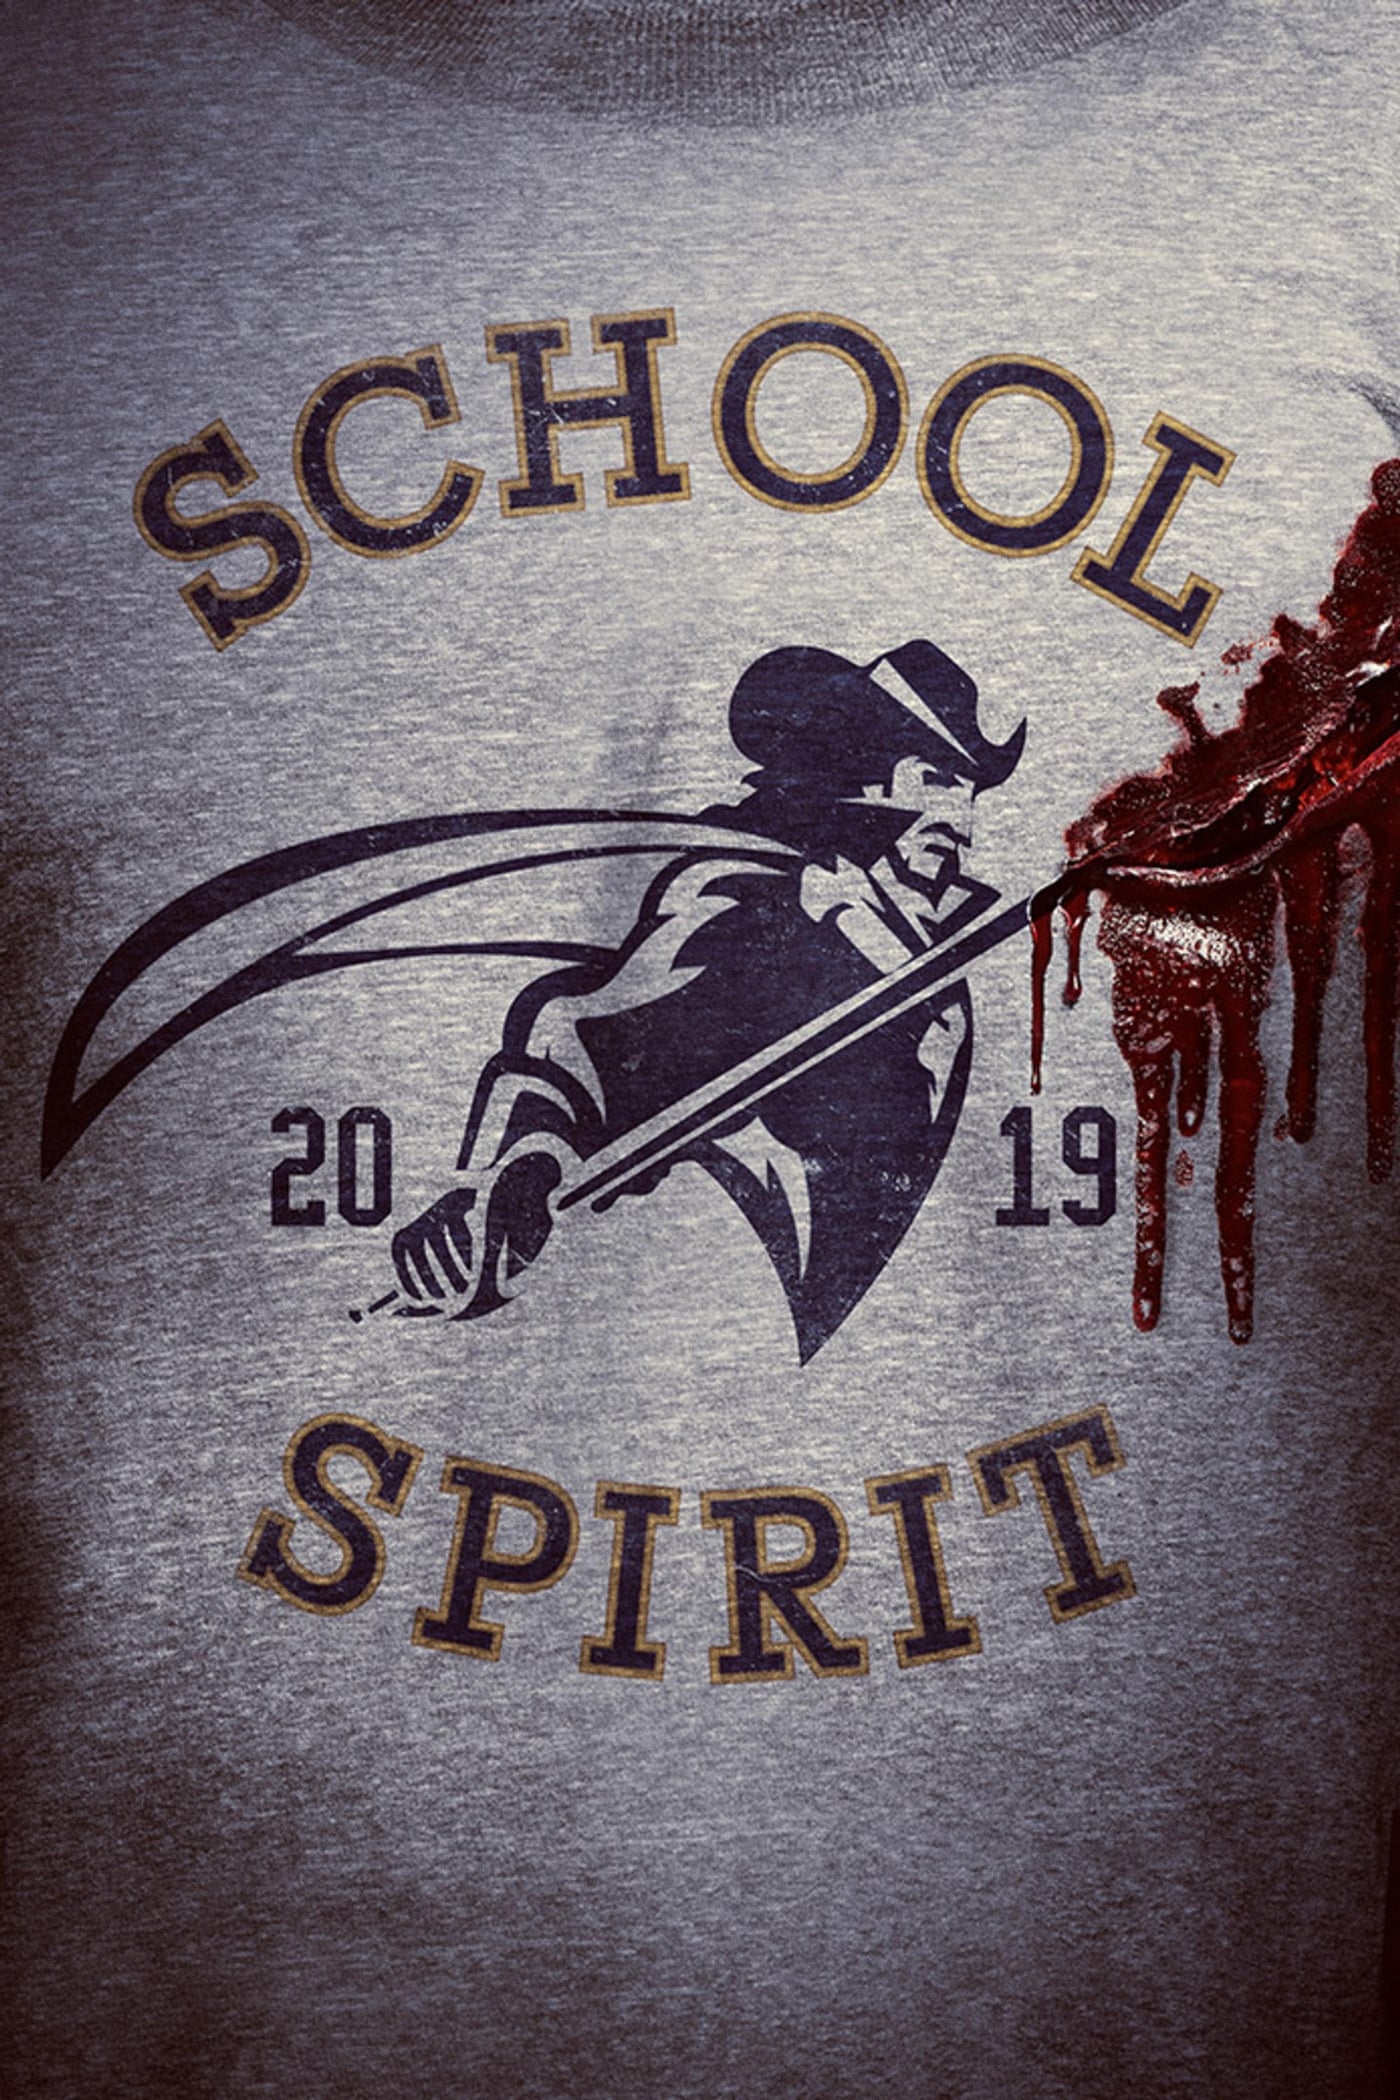 School Spirit (2019)